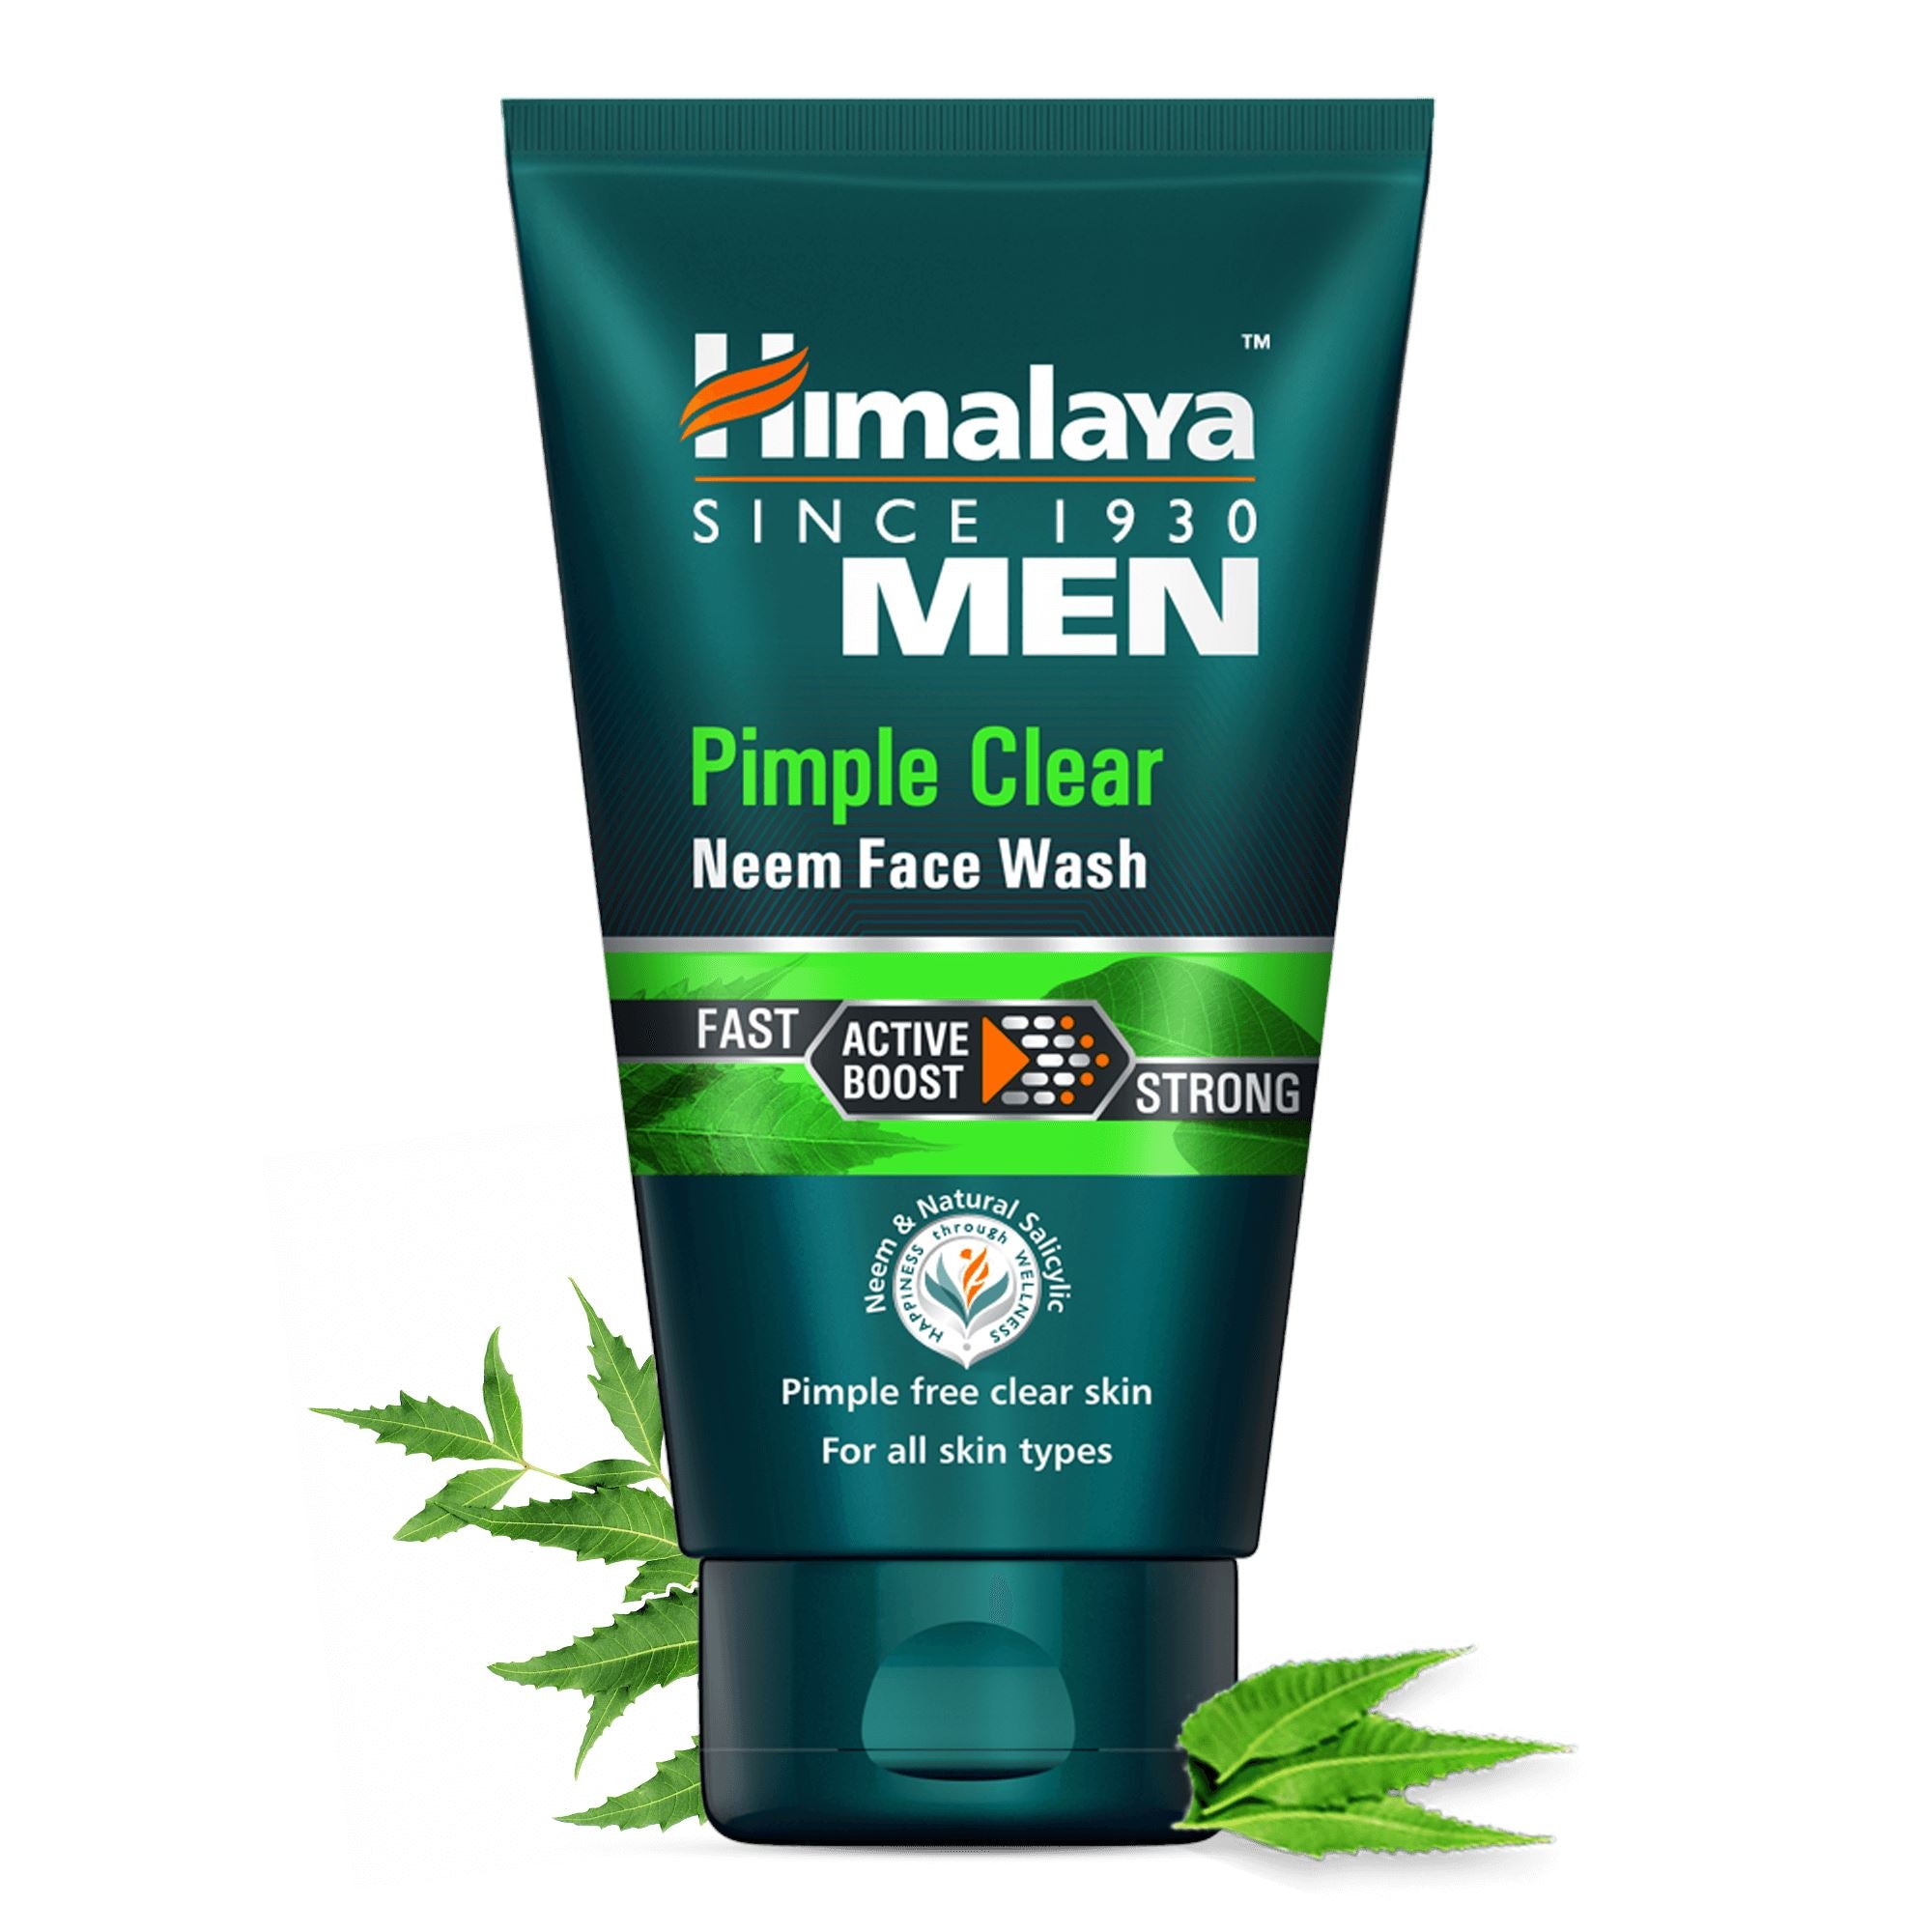 Himalaya Men Pimple Clear Neem Face Wash -  Face wash for men